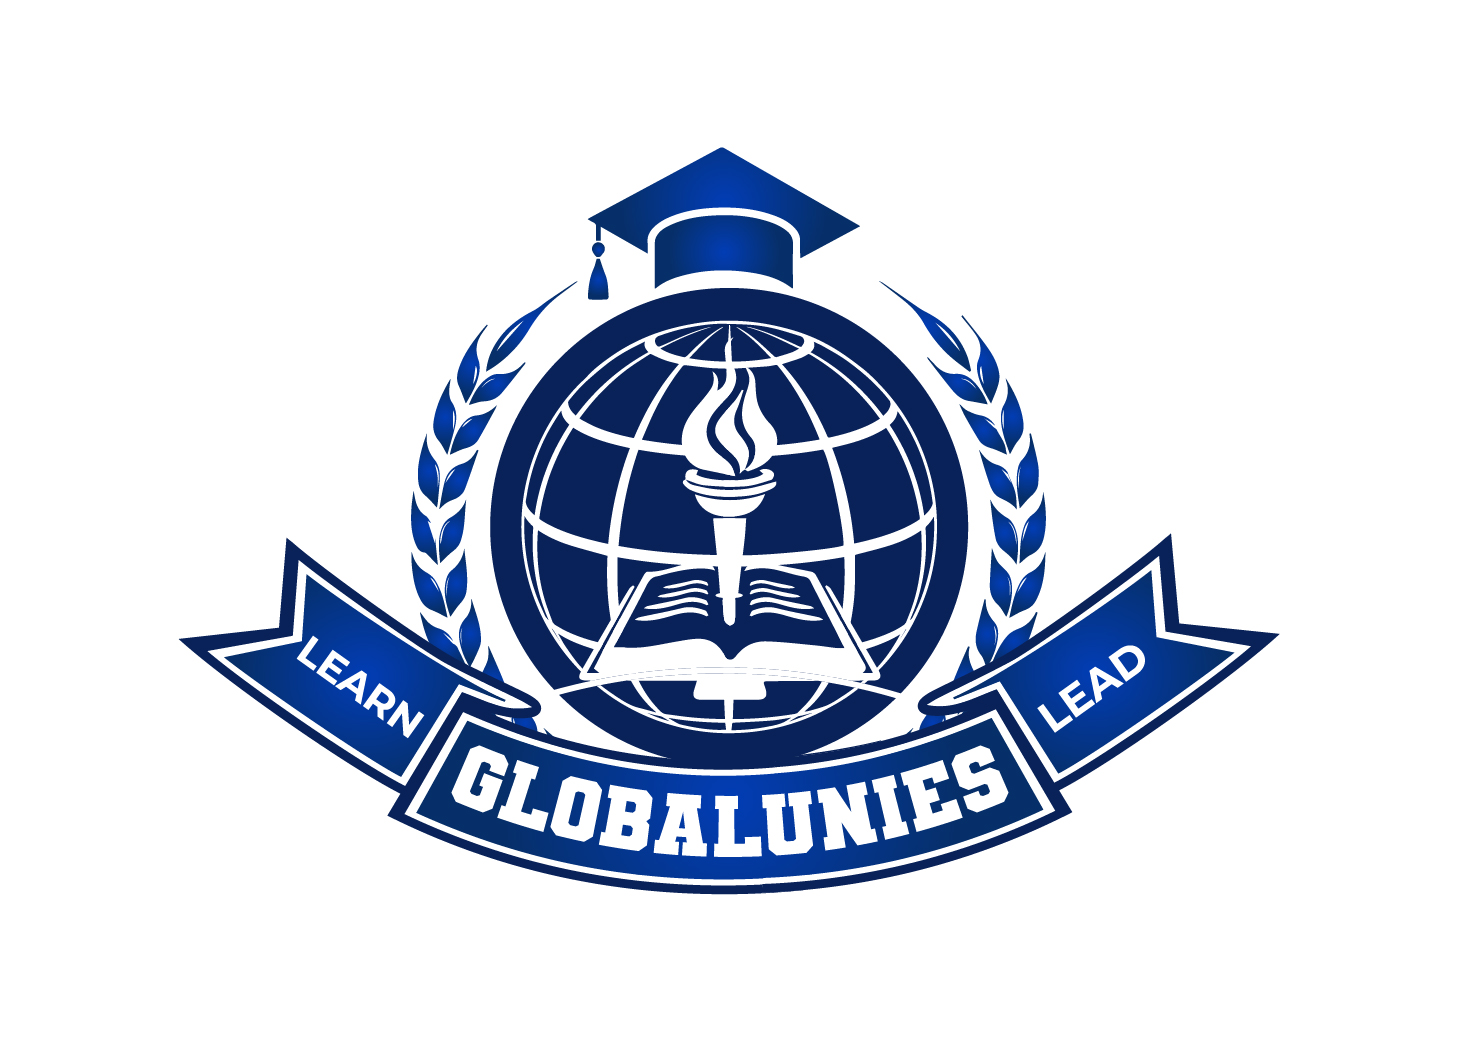 GLOBALUNIES Logo